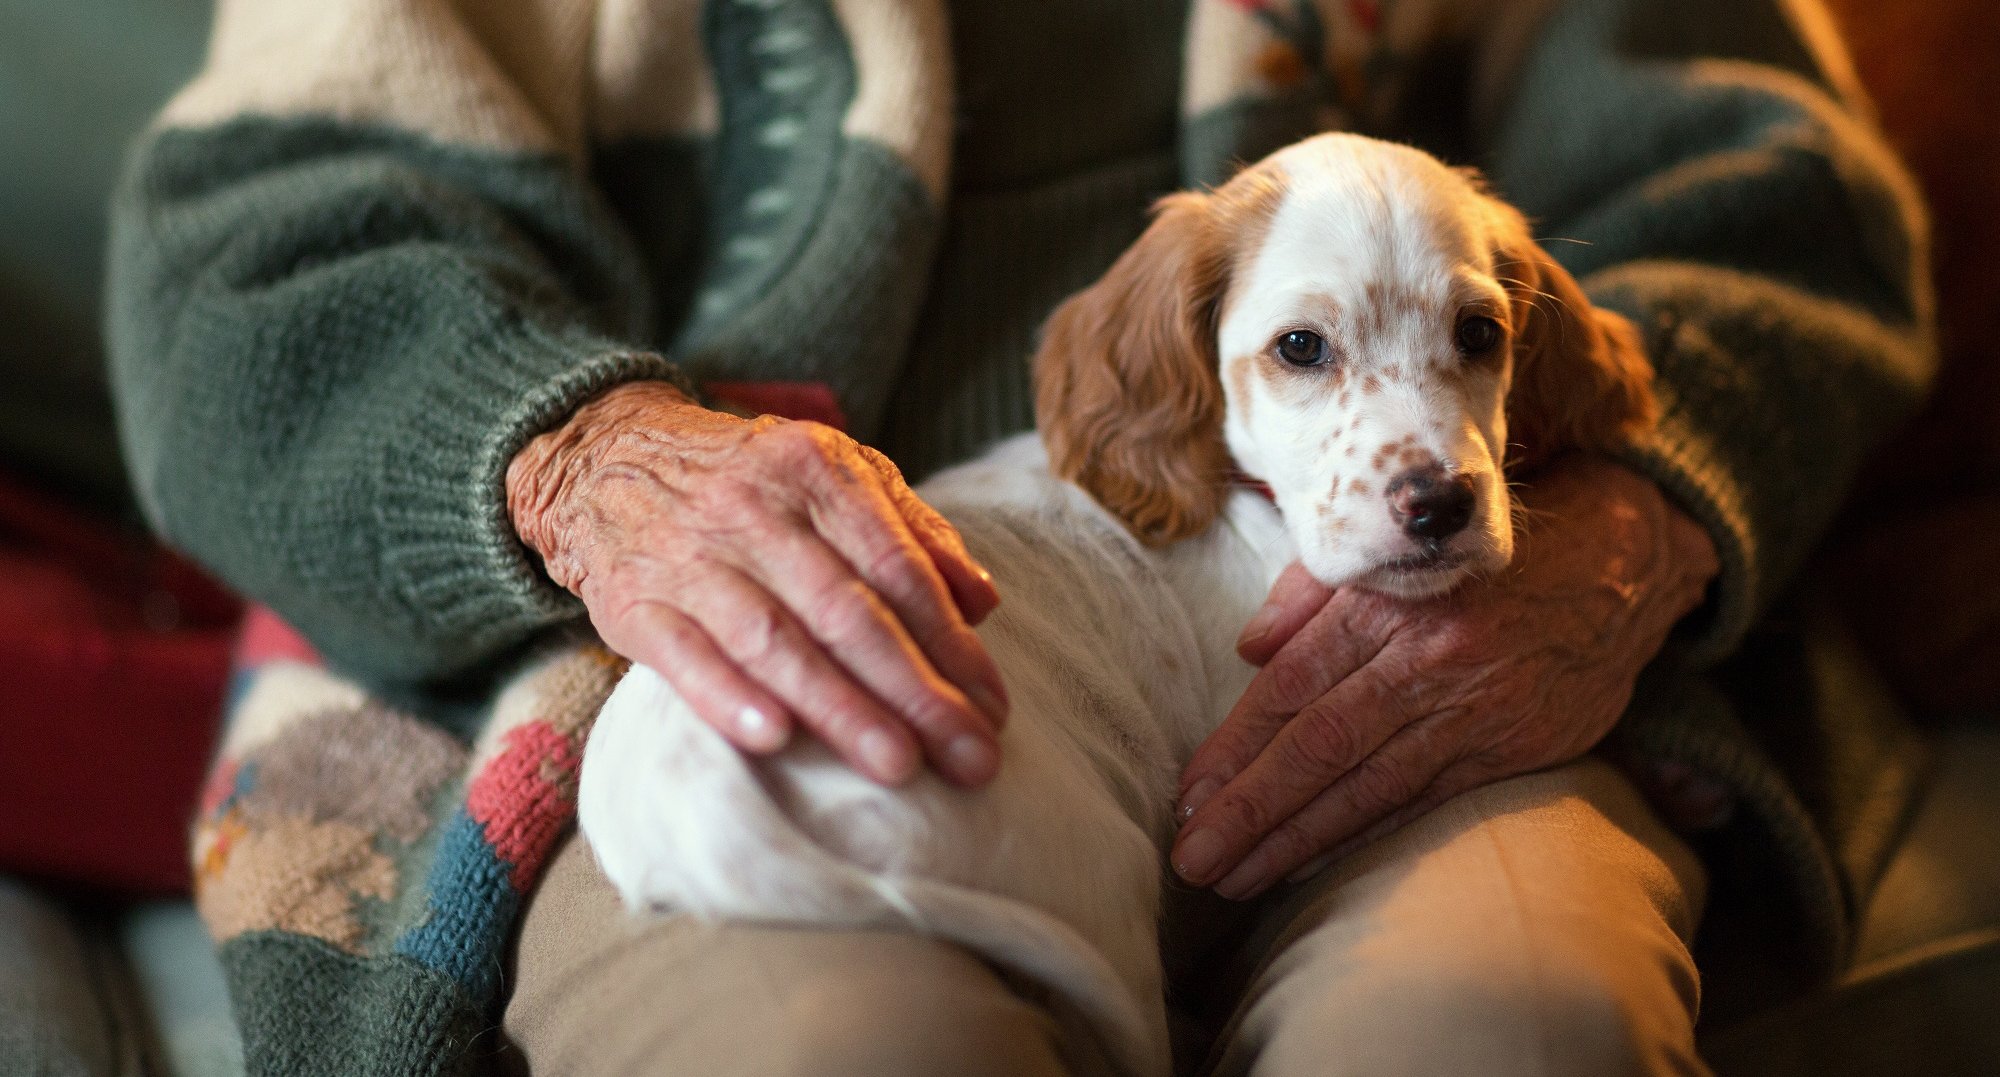 Senior women owning pet experience benefits